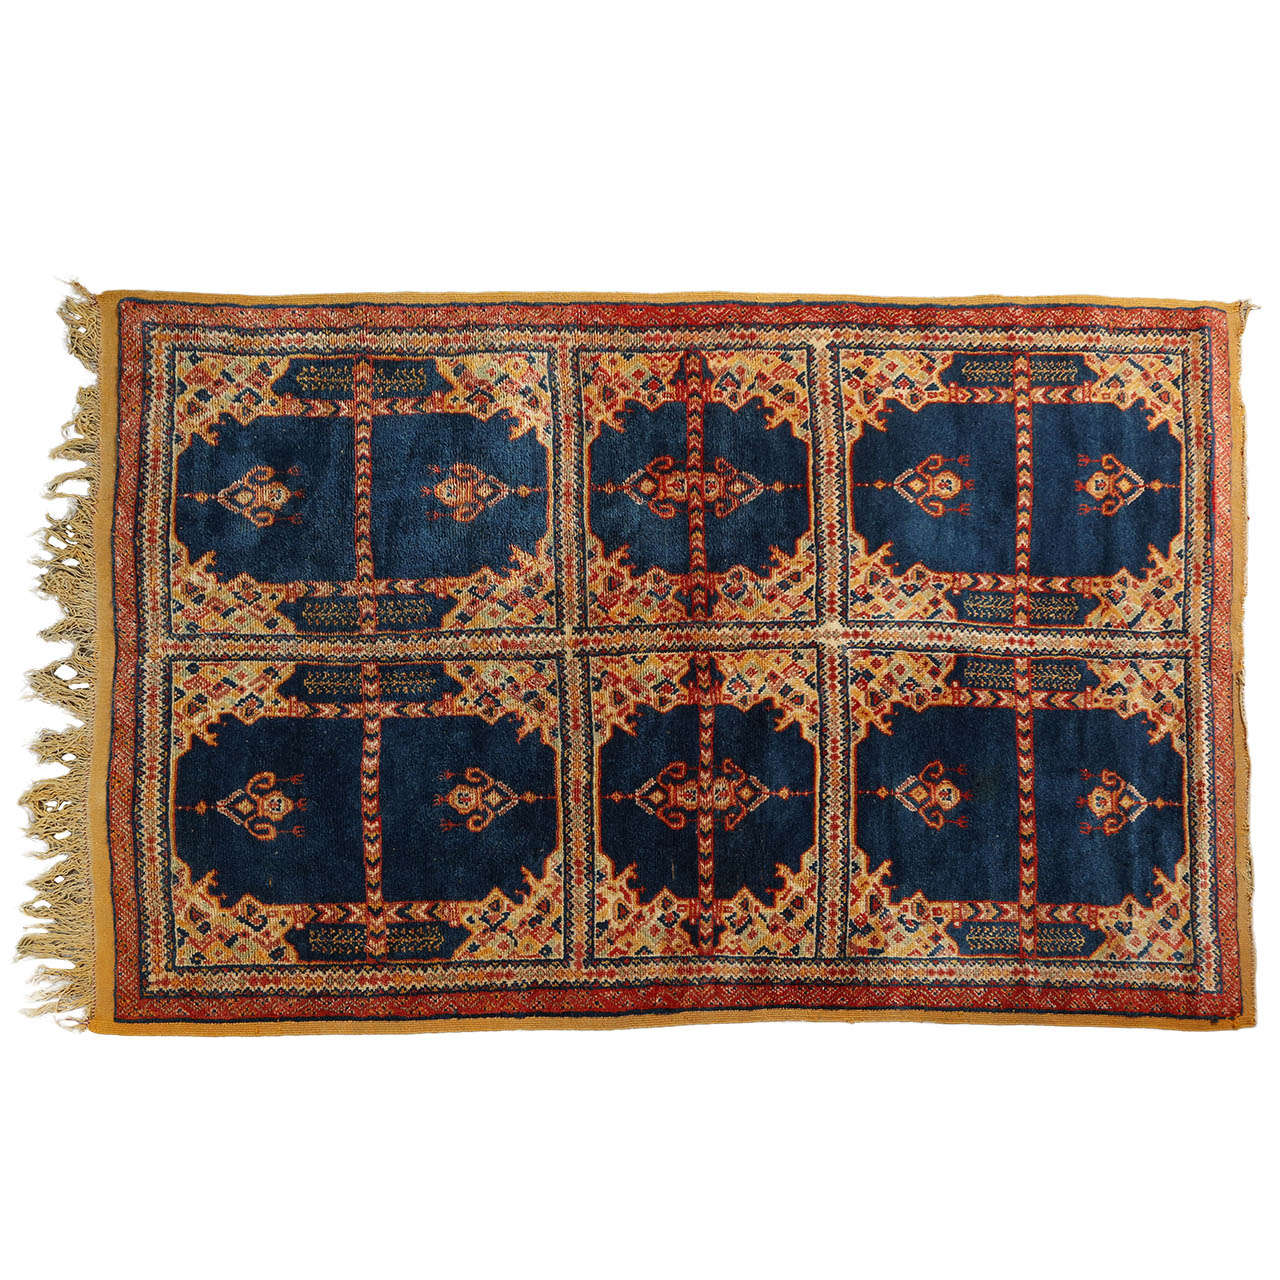 Vintage Moroccan Tribal African Rug